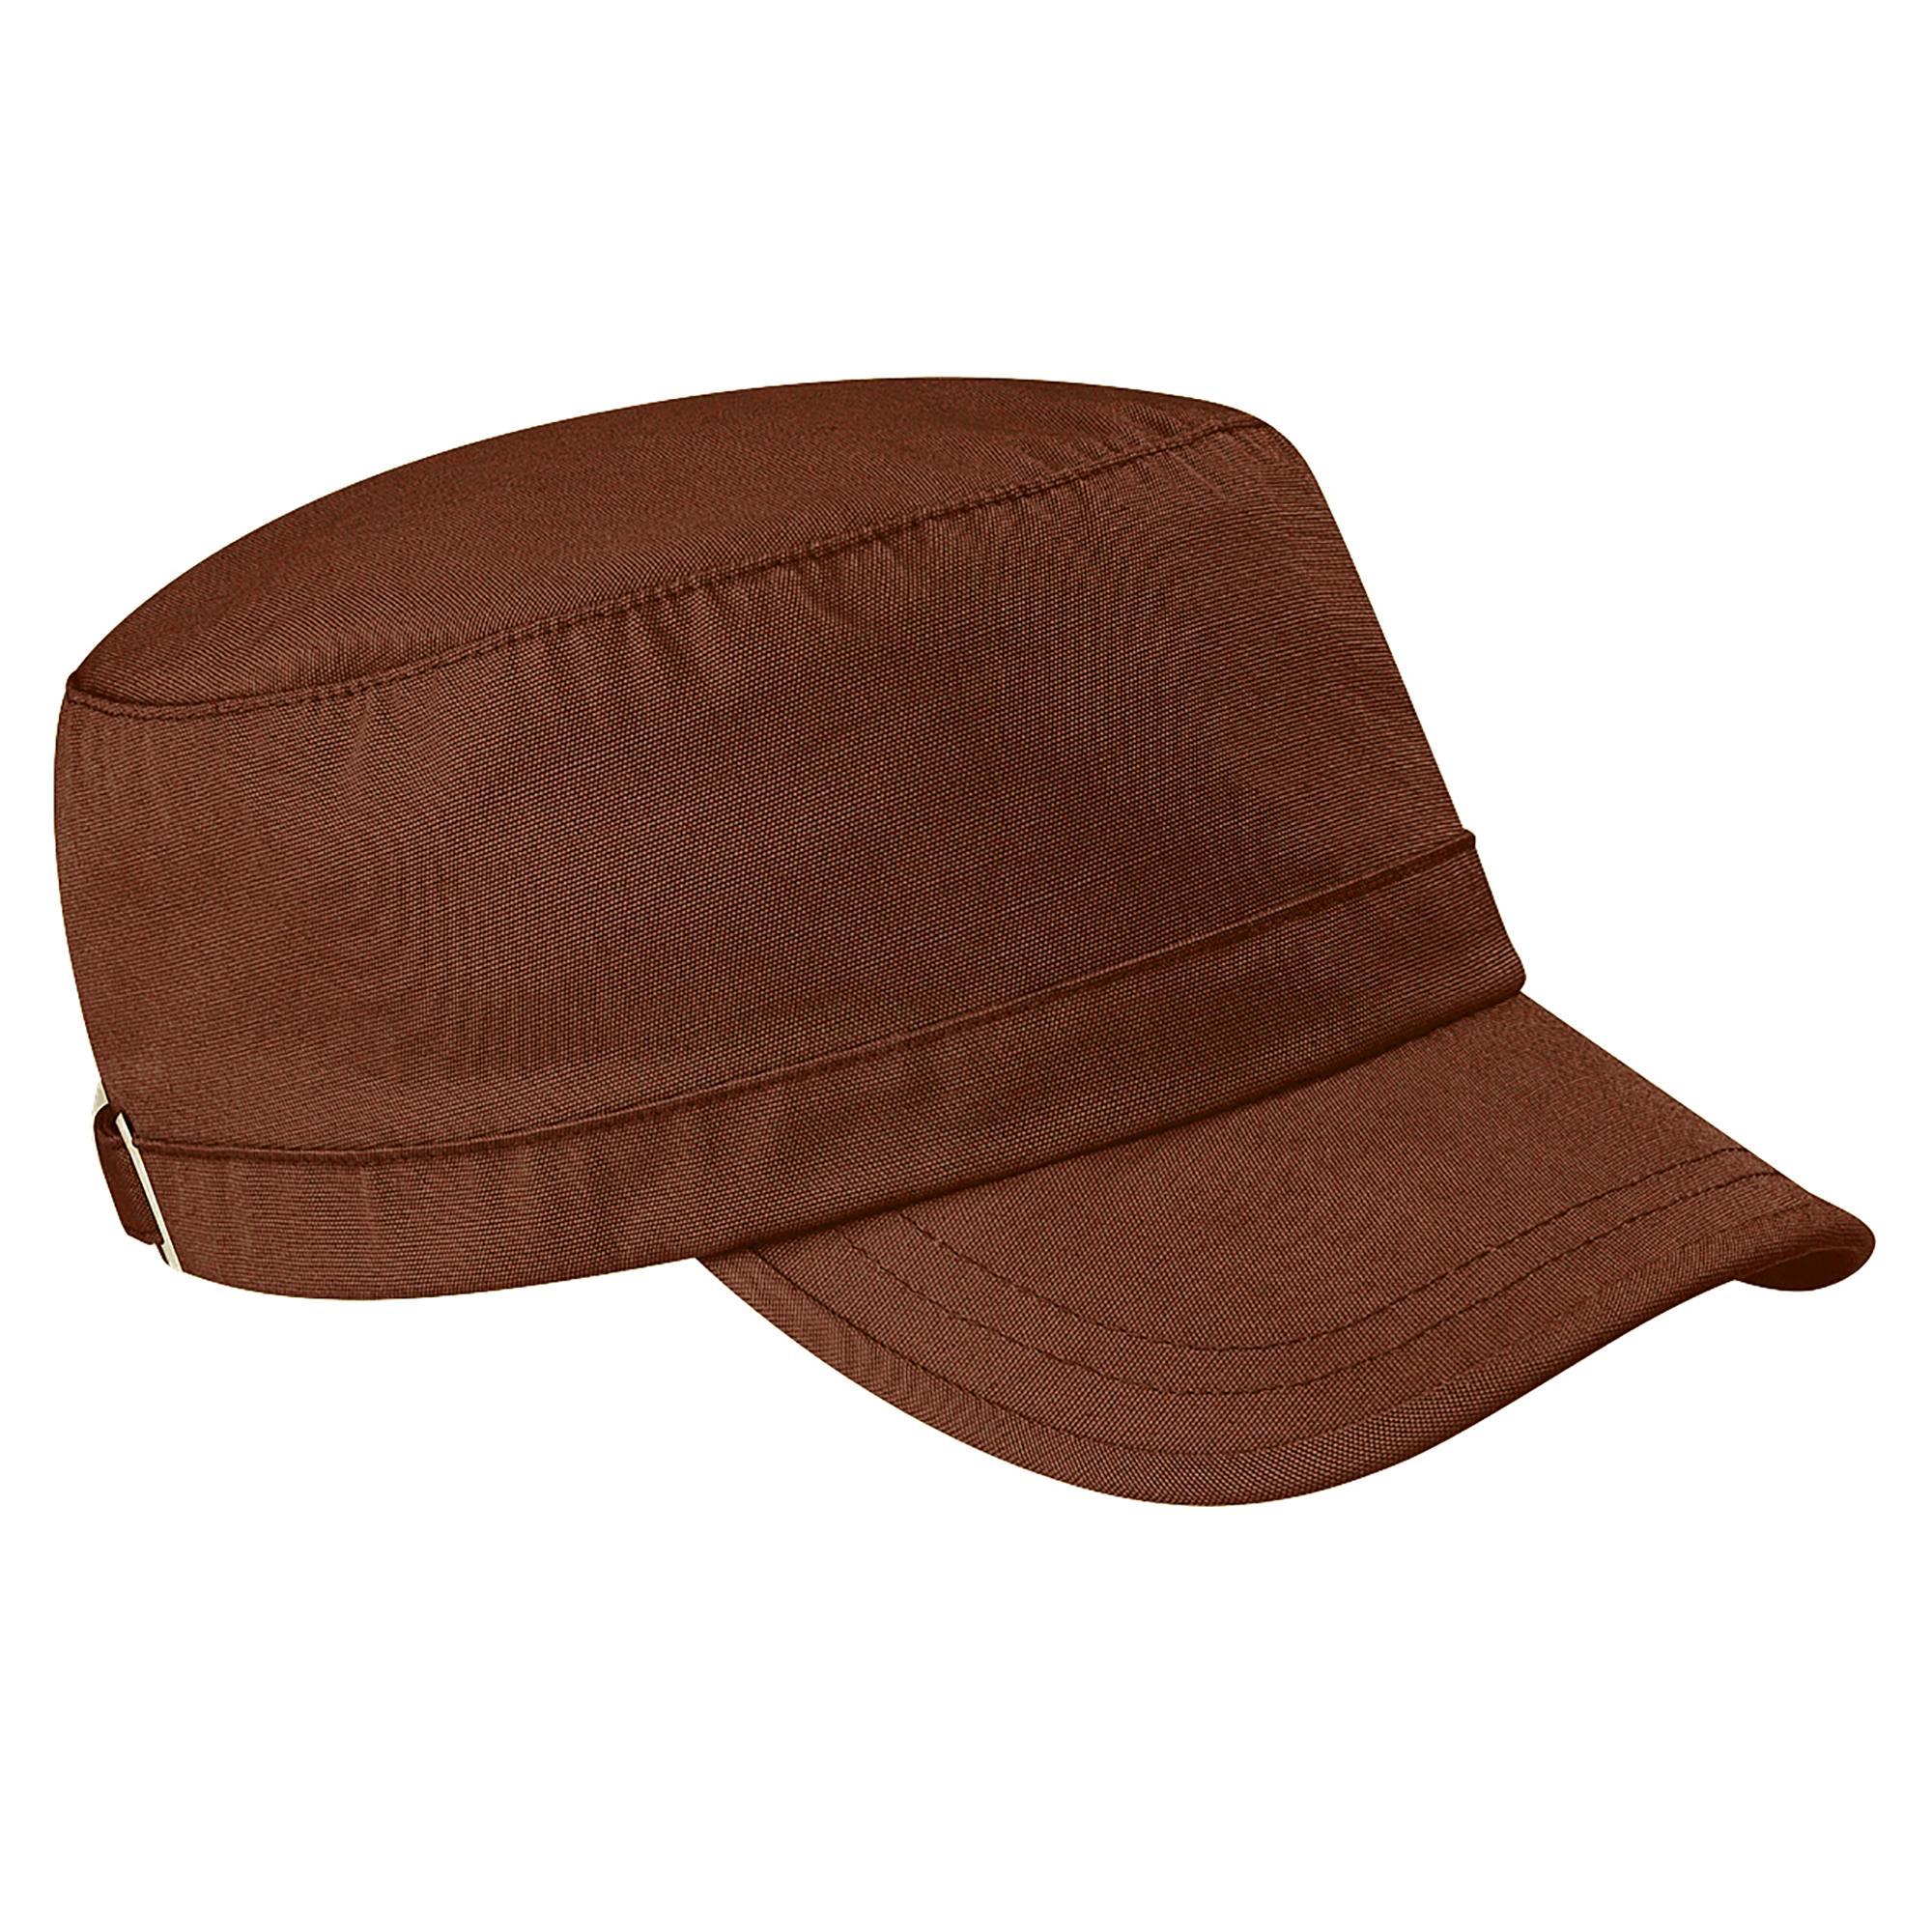 Beechfield Army Cap / Headwear (Chocolate) (One Size)